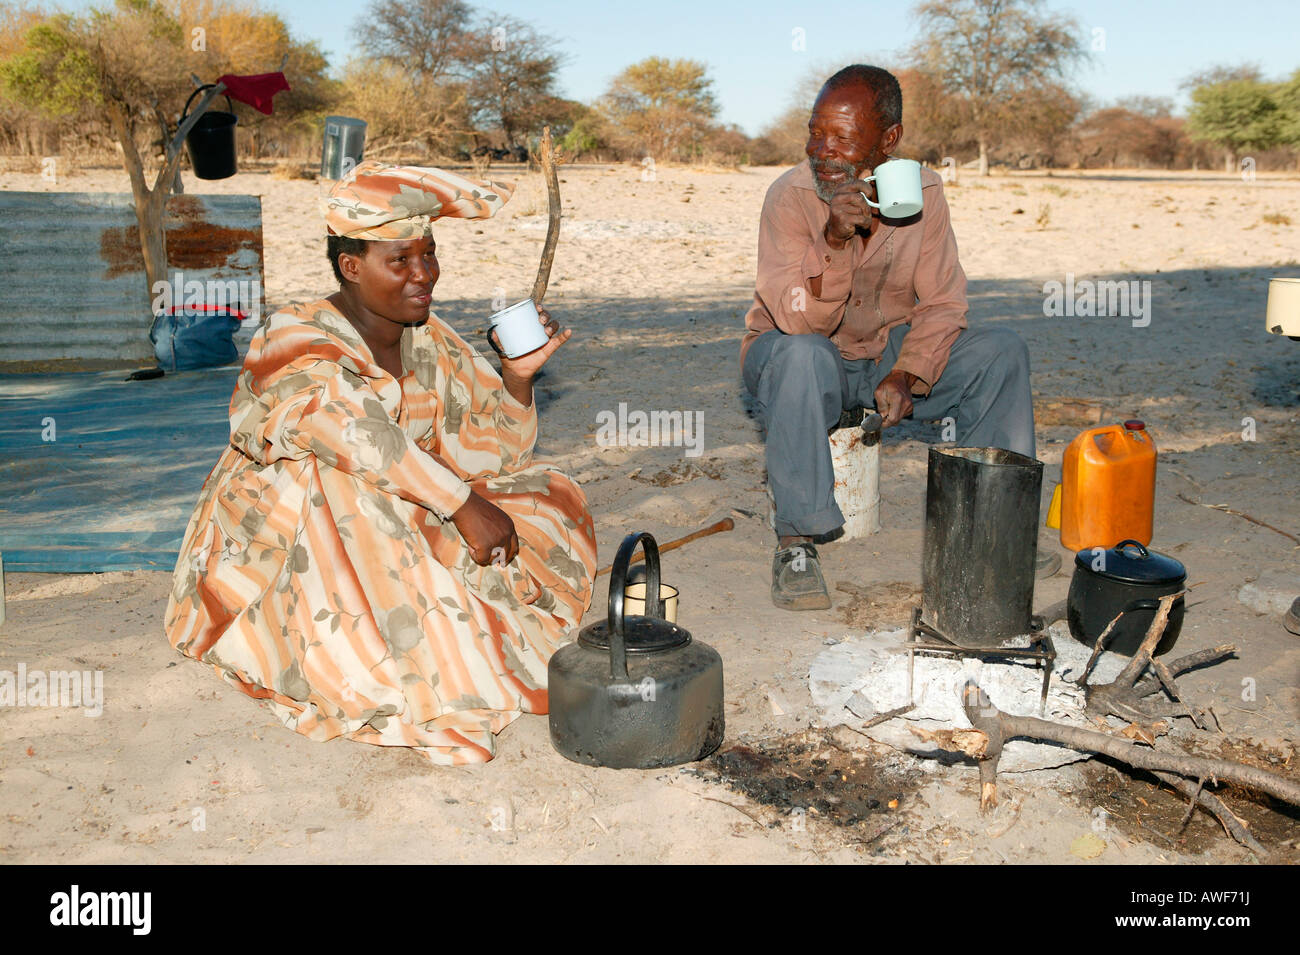 Petit déjeuner au camp, Cattlepost Bothatogo, Botswana, Africa Banque D'Images